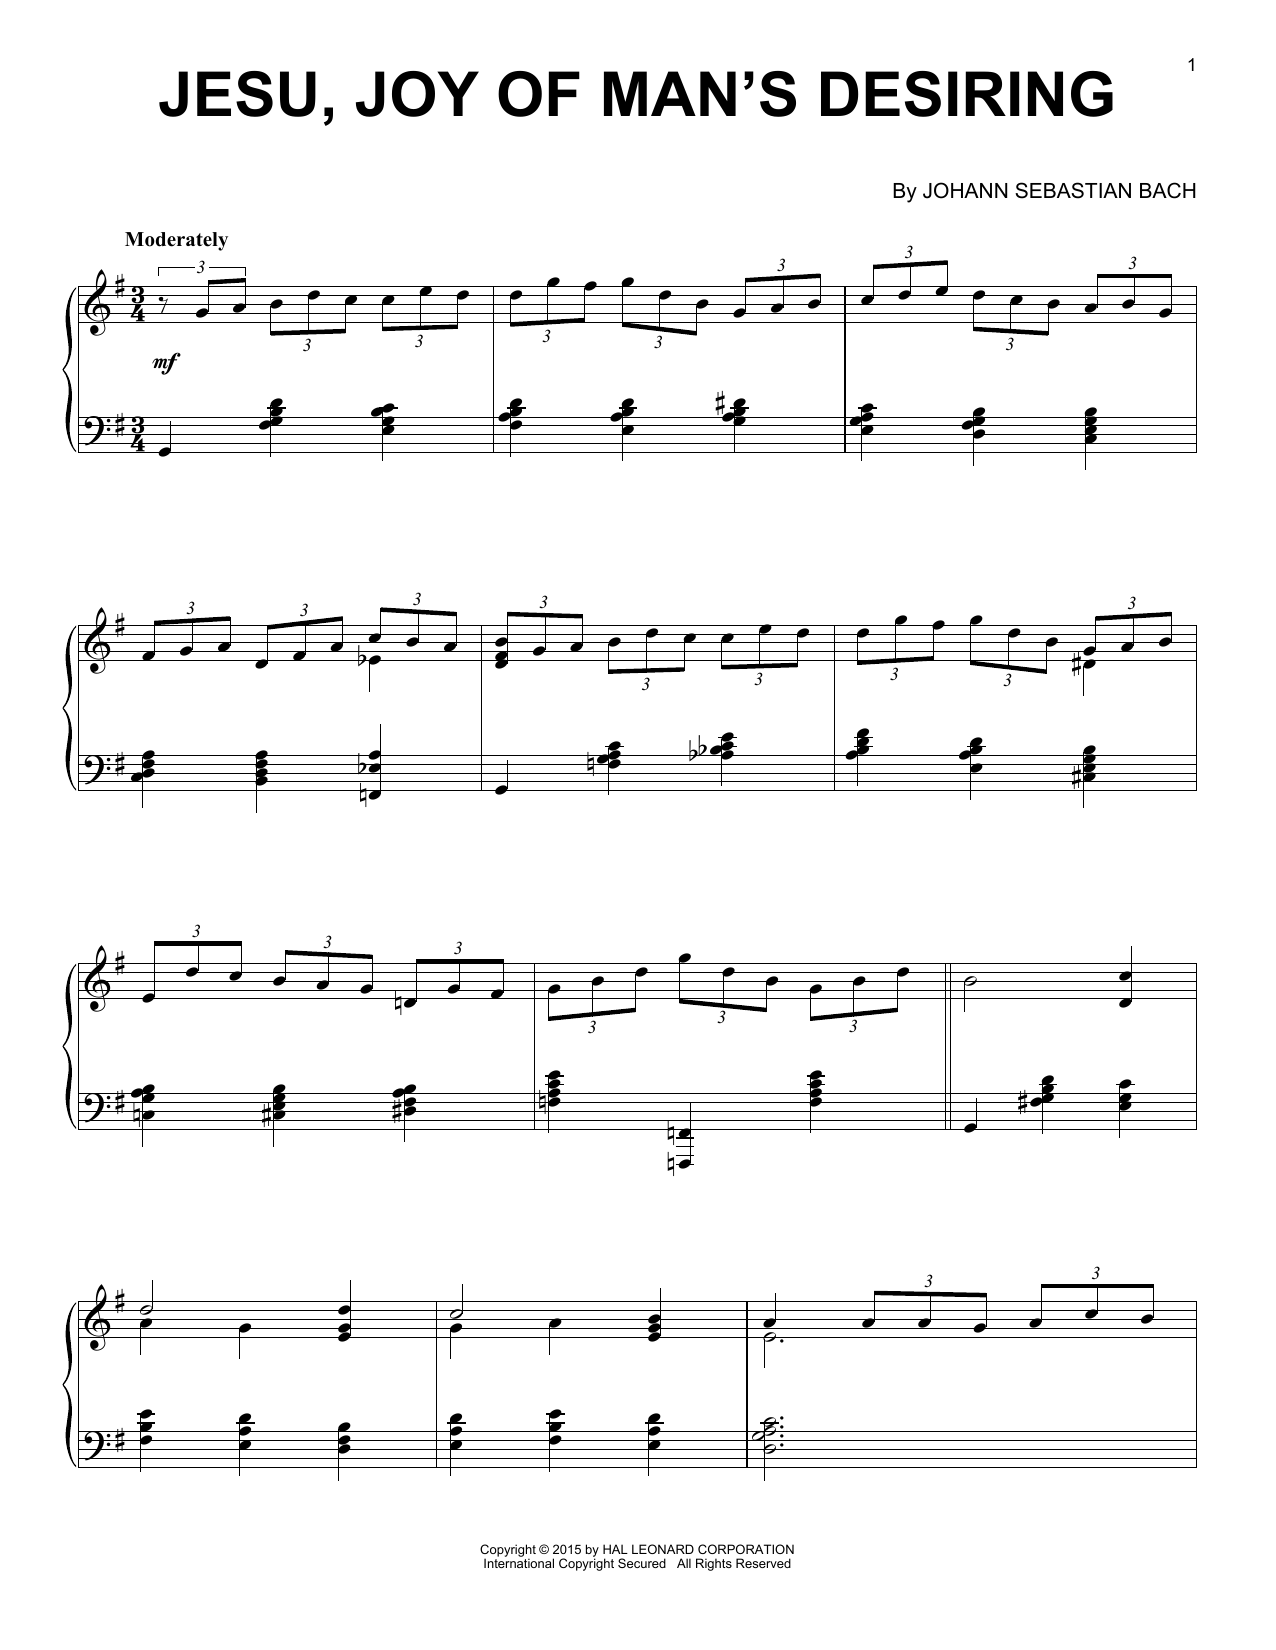 Johann Sebastian Bach Jesu, Joy Of Man's Desiring [Jazz version] Sheet Music Notes & Chords for Piano - Download or Print PDF